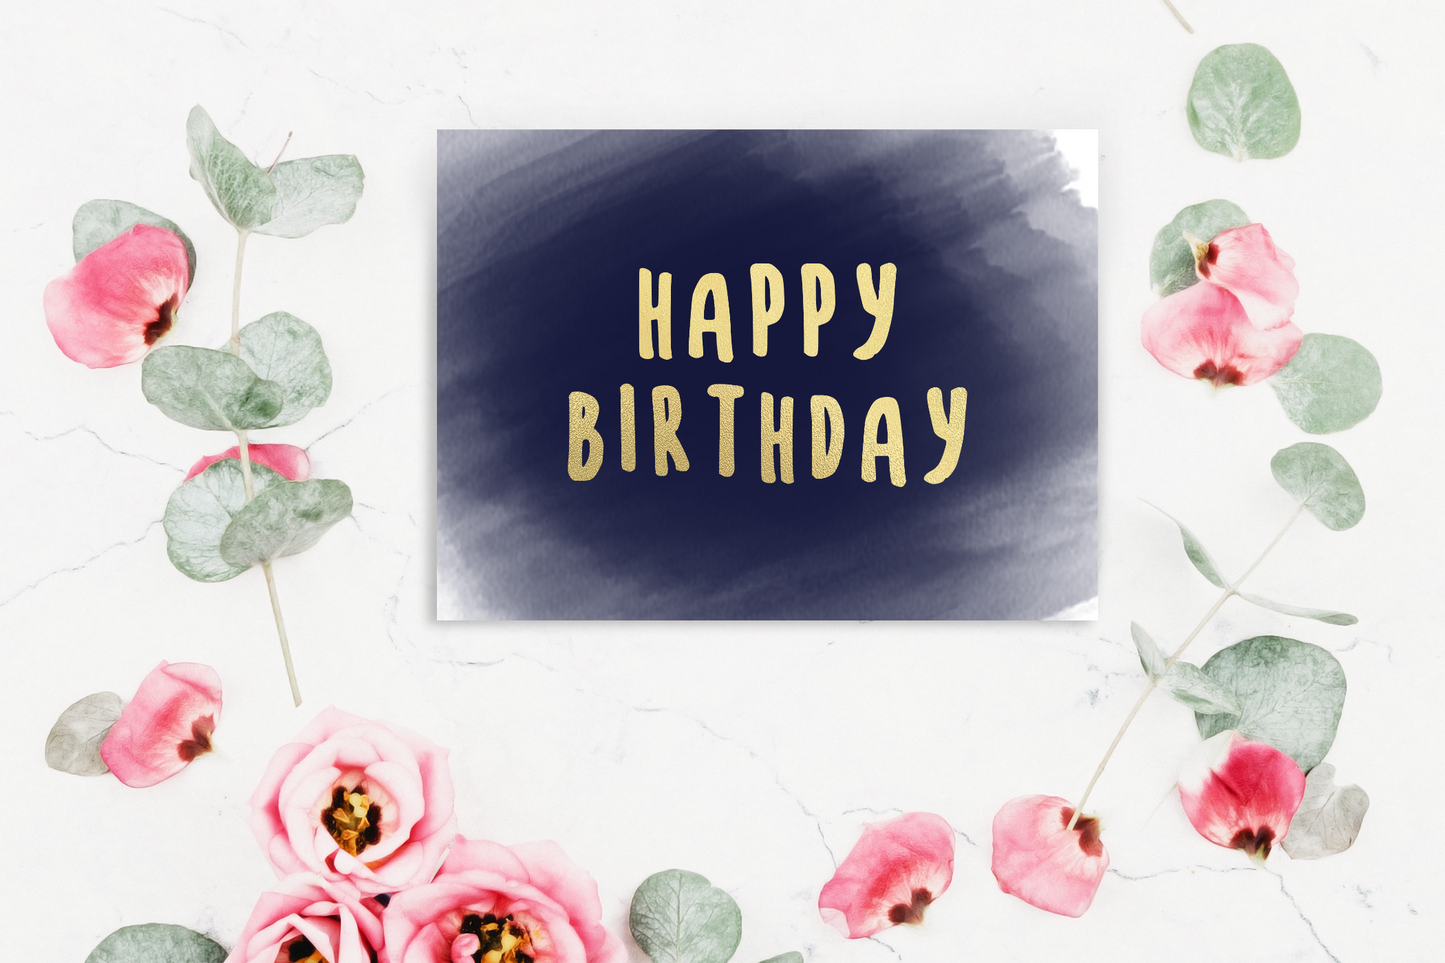 Foiled Happy Birthday Card